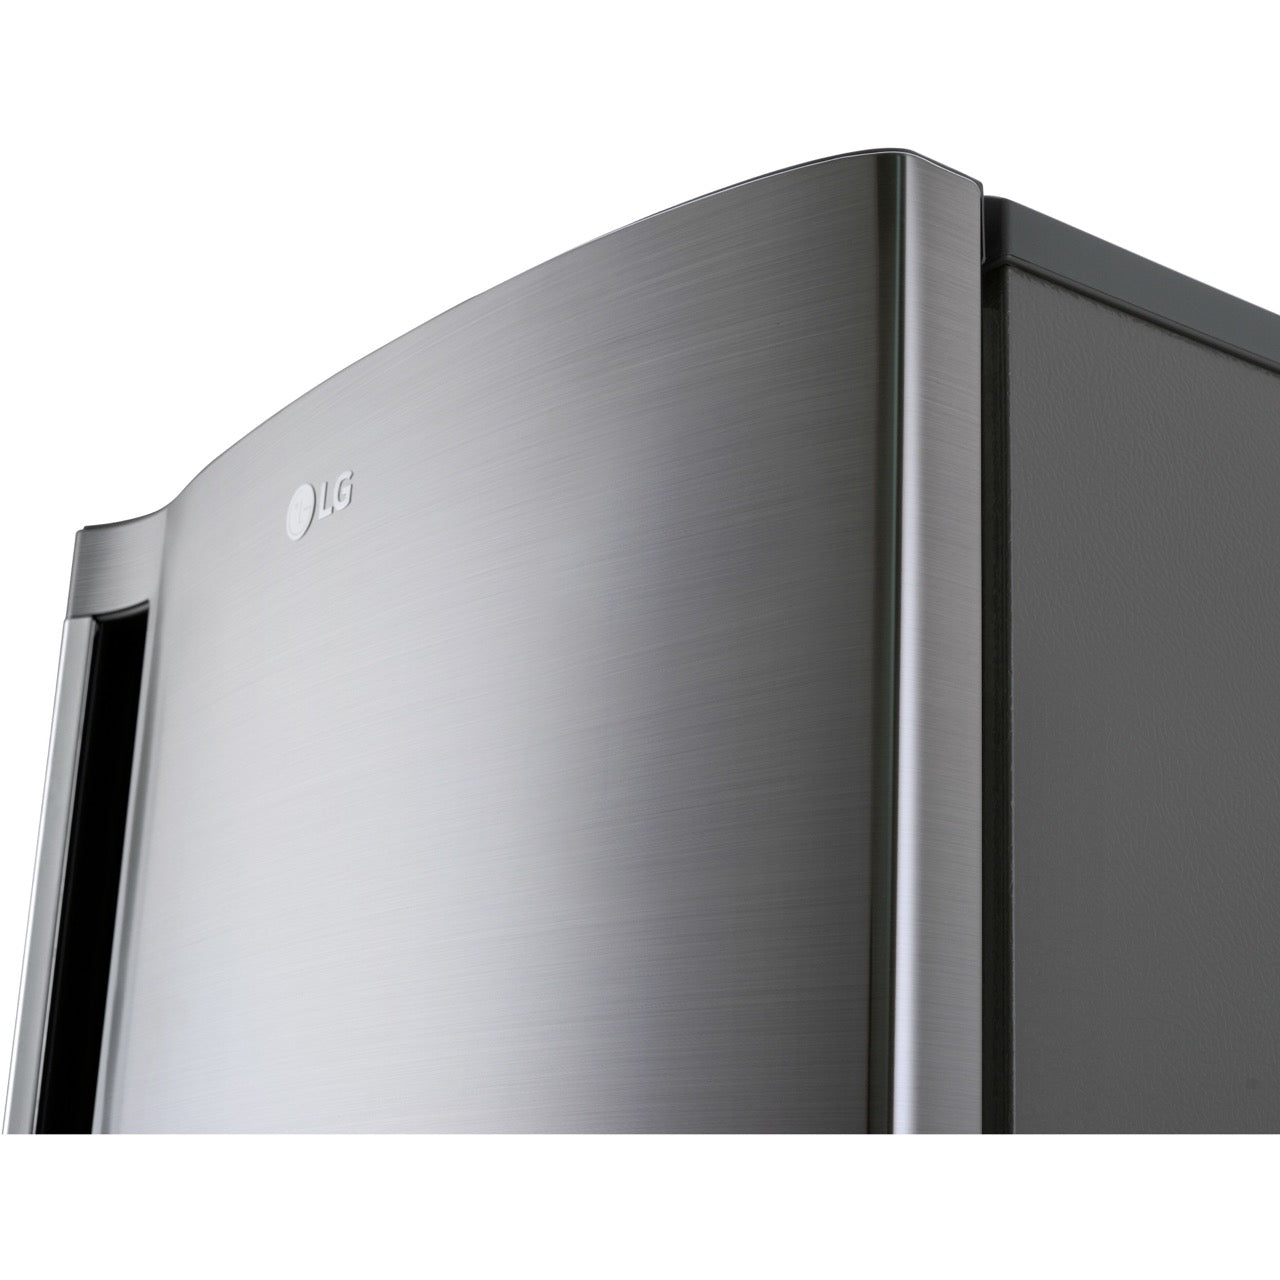 LG 5.8-Cu. Ft. Single Door Freezer, Platinum Silver (LROFC0605V)